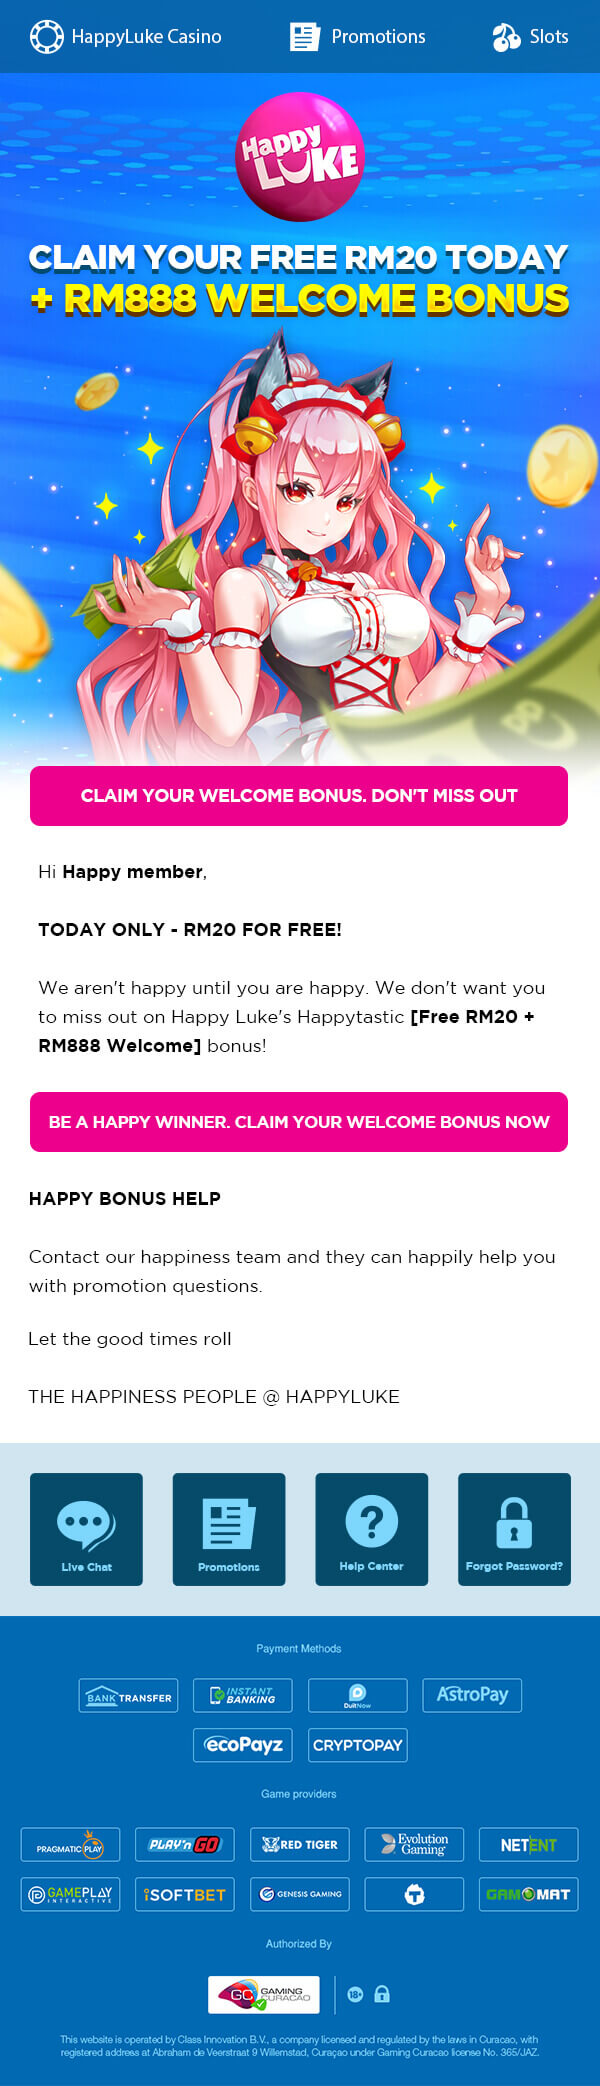 HappyLuke Free RM20 + RM888 Welcome Bonus